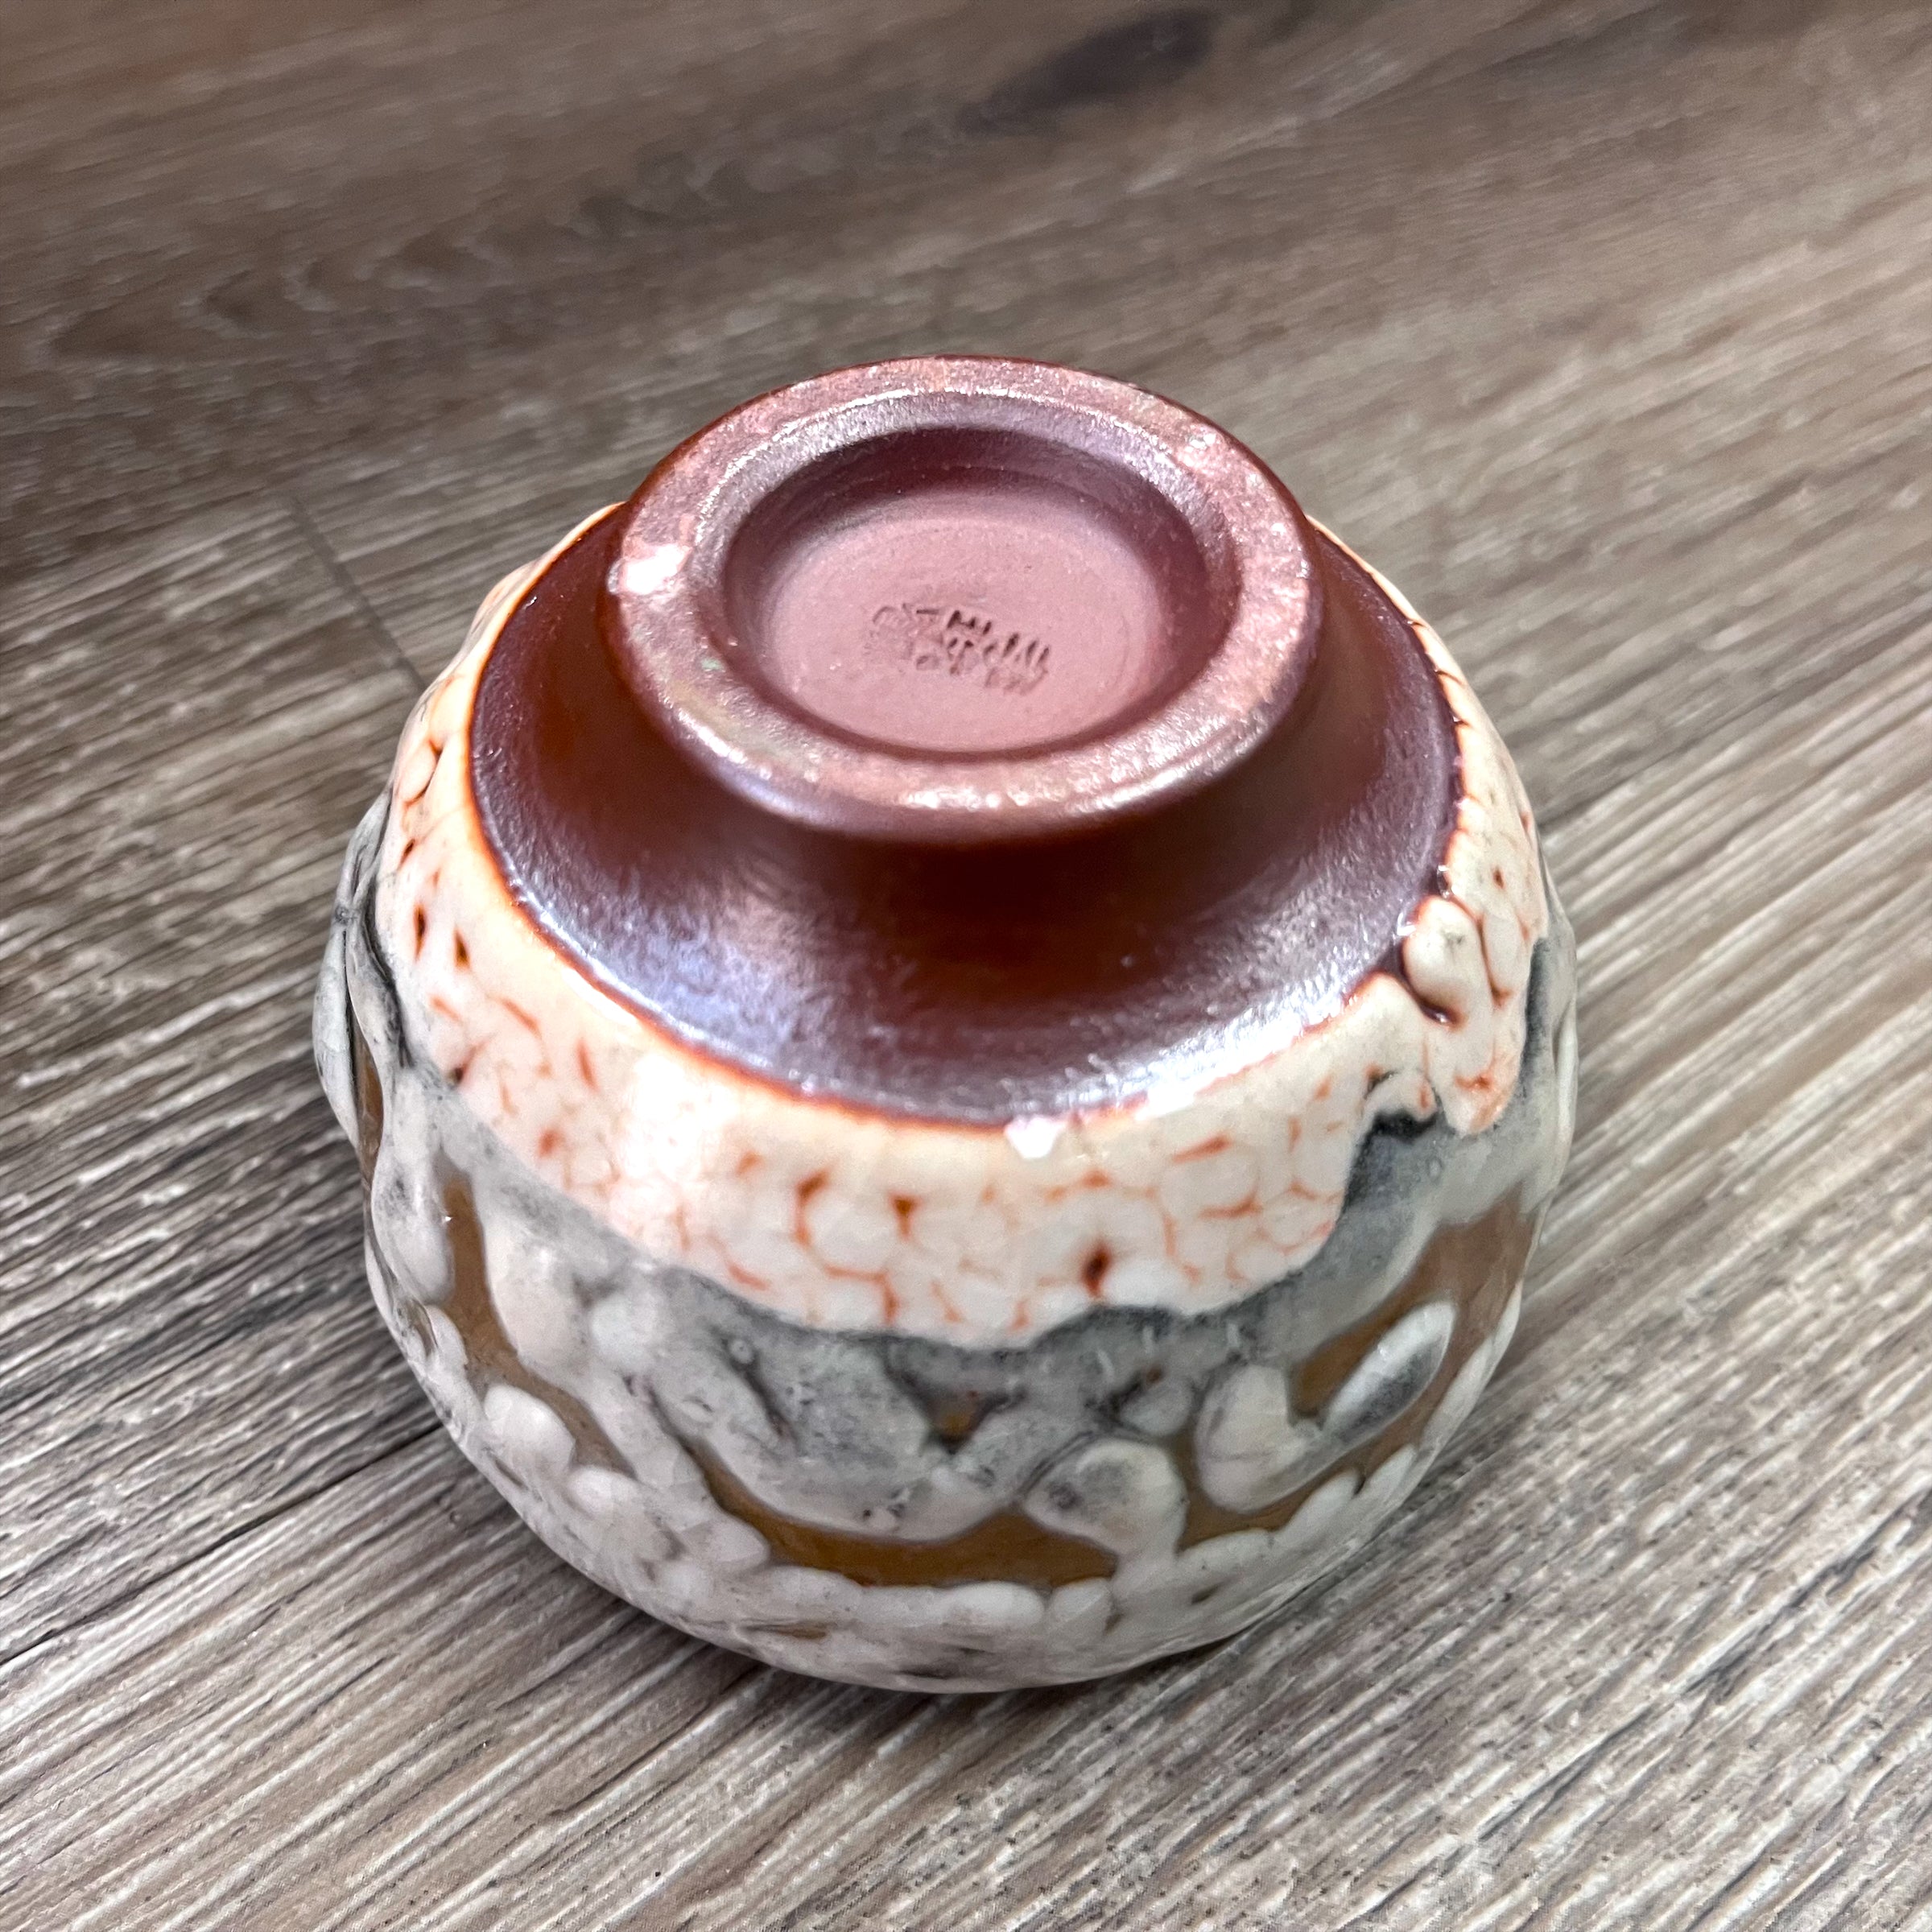 Taiwanese Handmade Wood-Fired Ceramic Teacup - Snowy Mountain